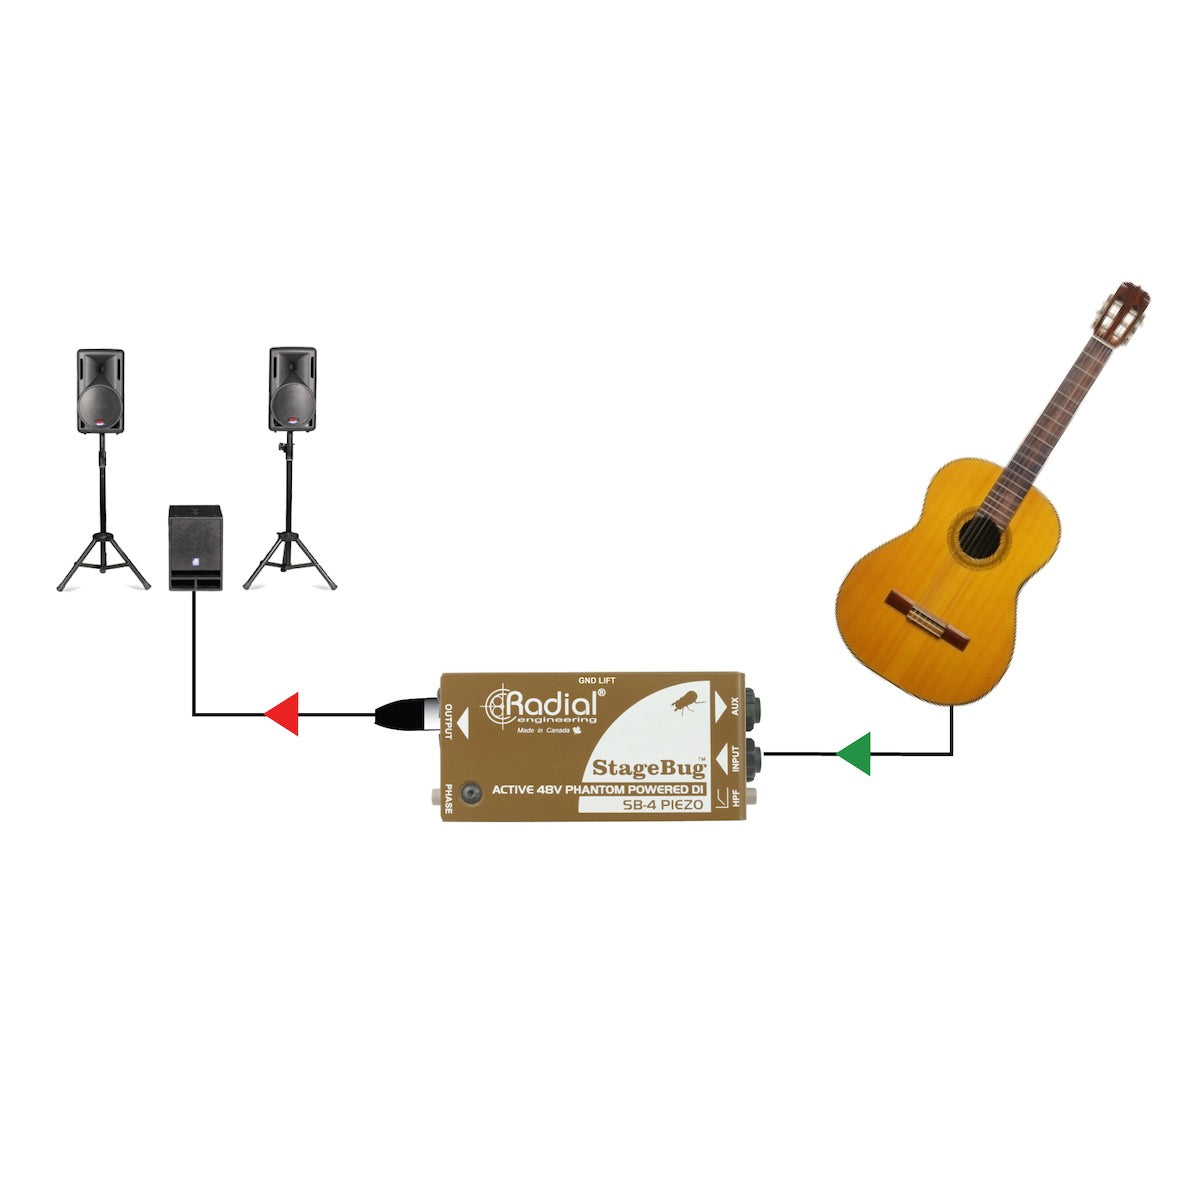 Radial StageBug SB-4 Piezo - Compact Active Direct Box for Piezo Pickups, application diagram